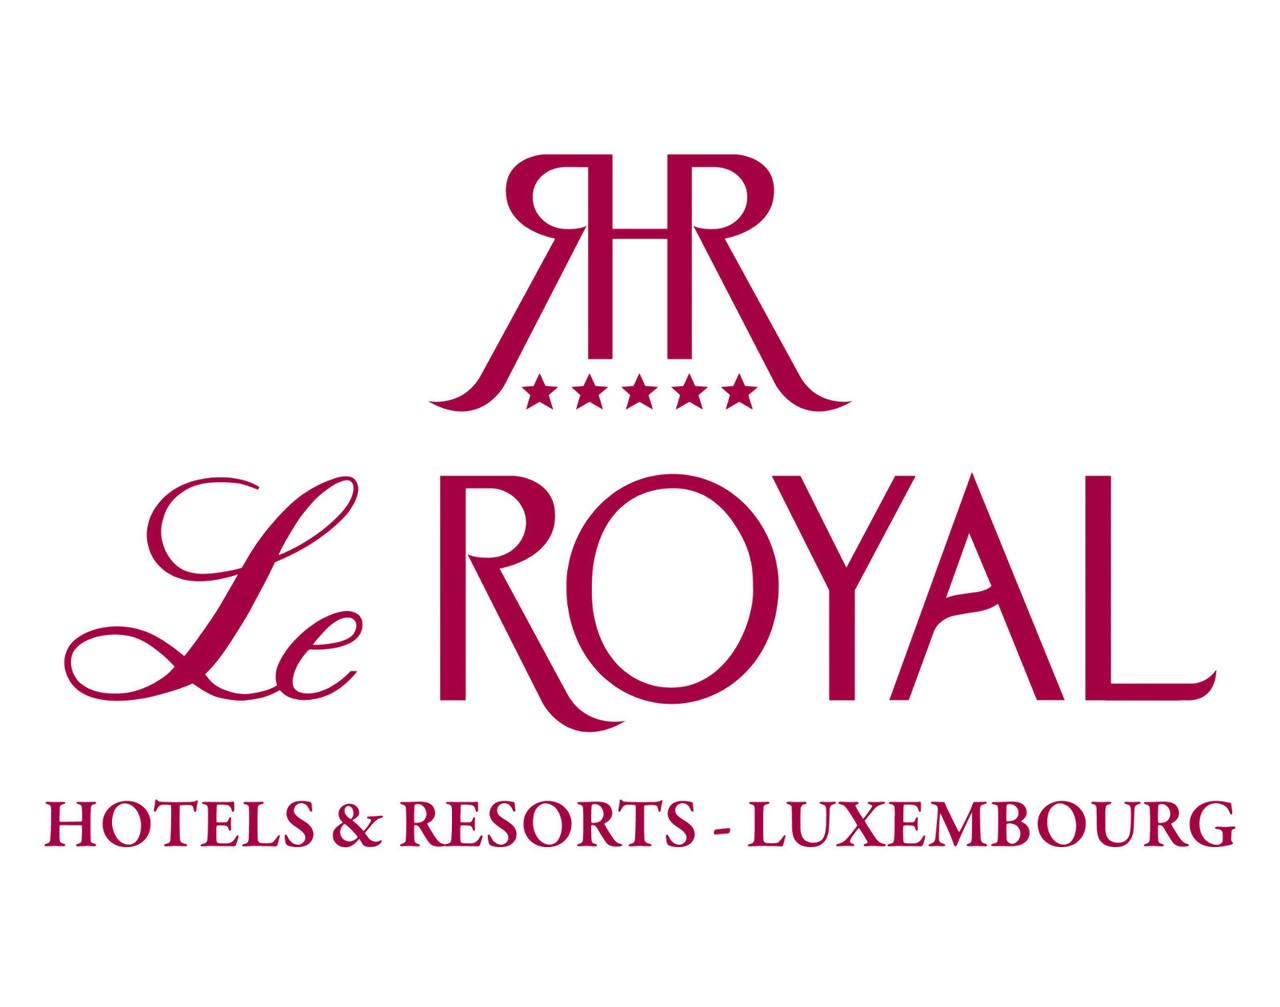 Le Royal Hôtel & Resorts